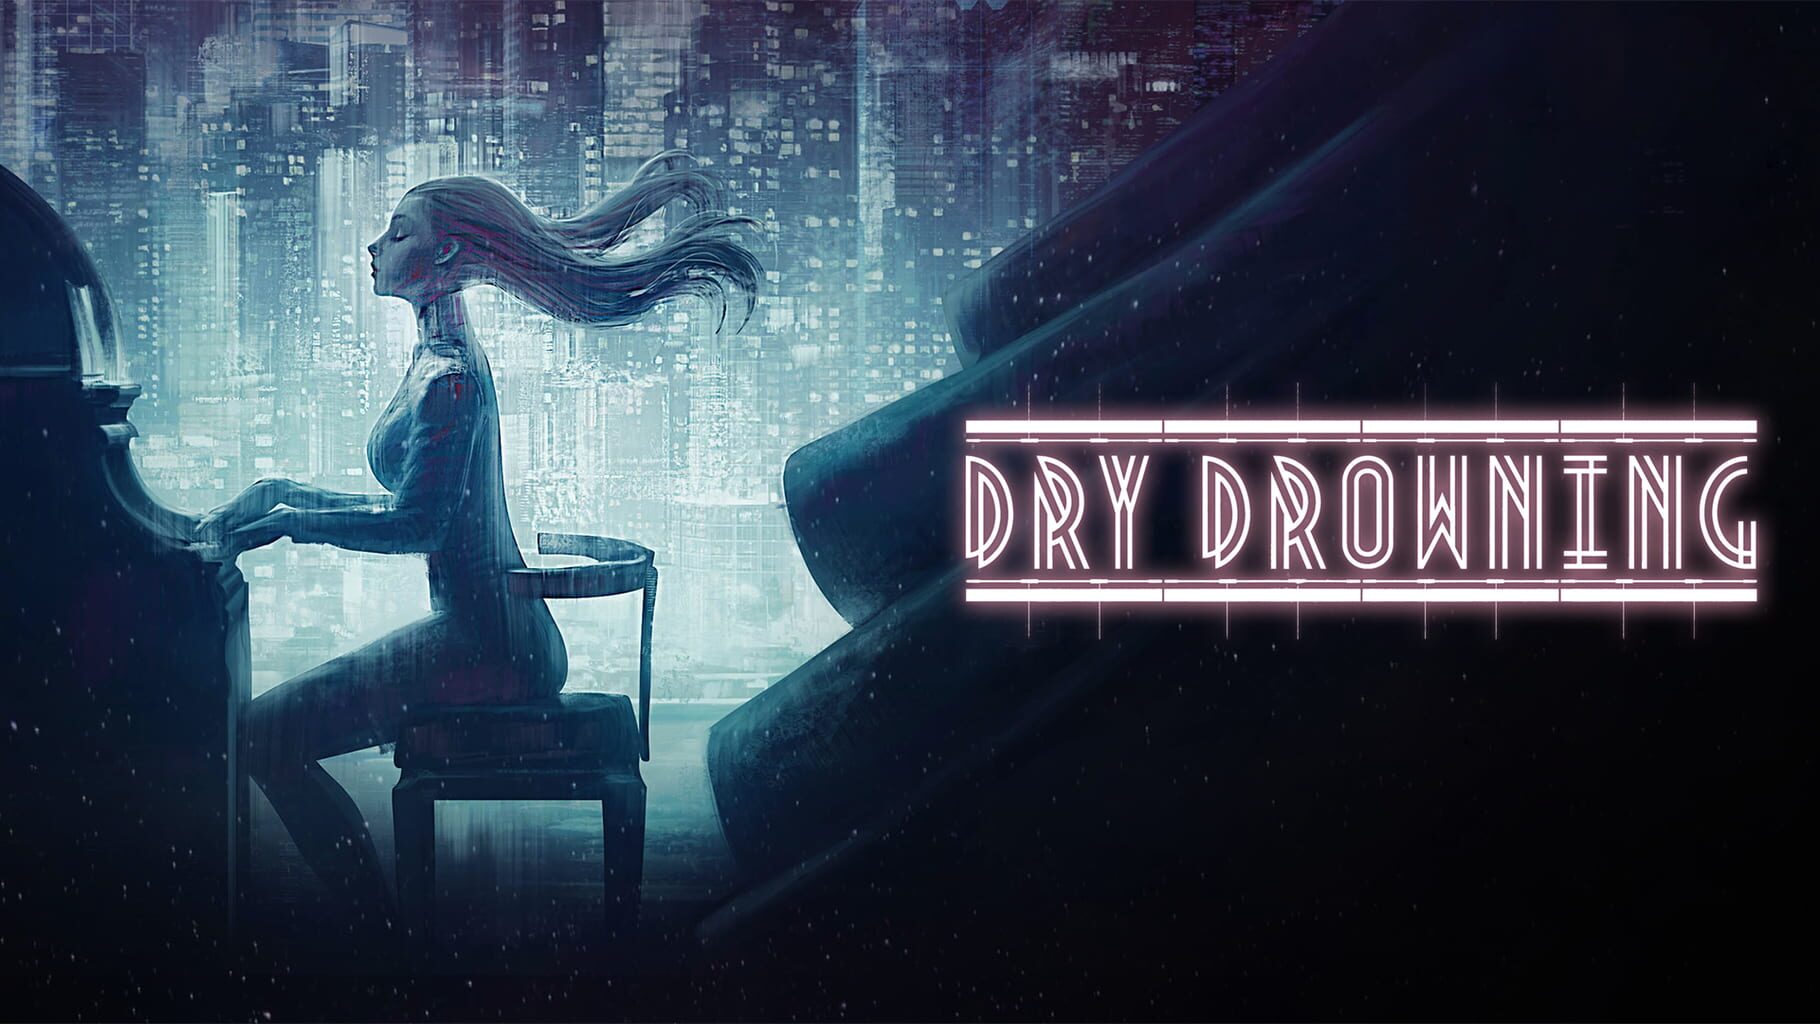 Dry Drowning artwork